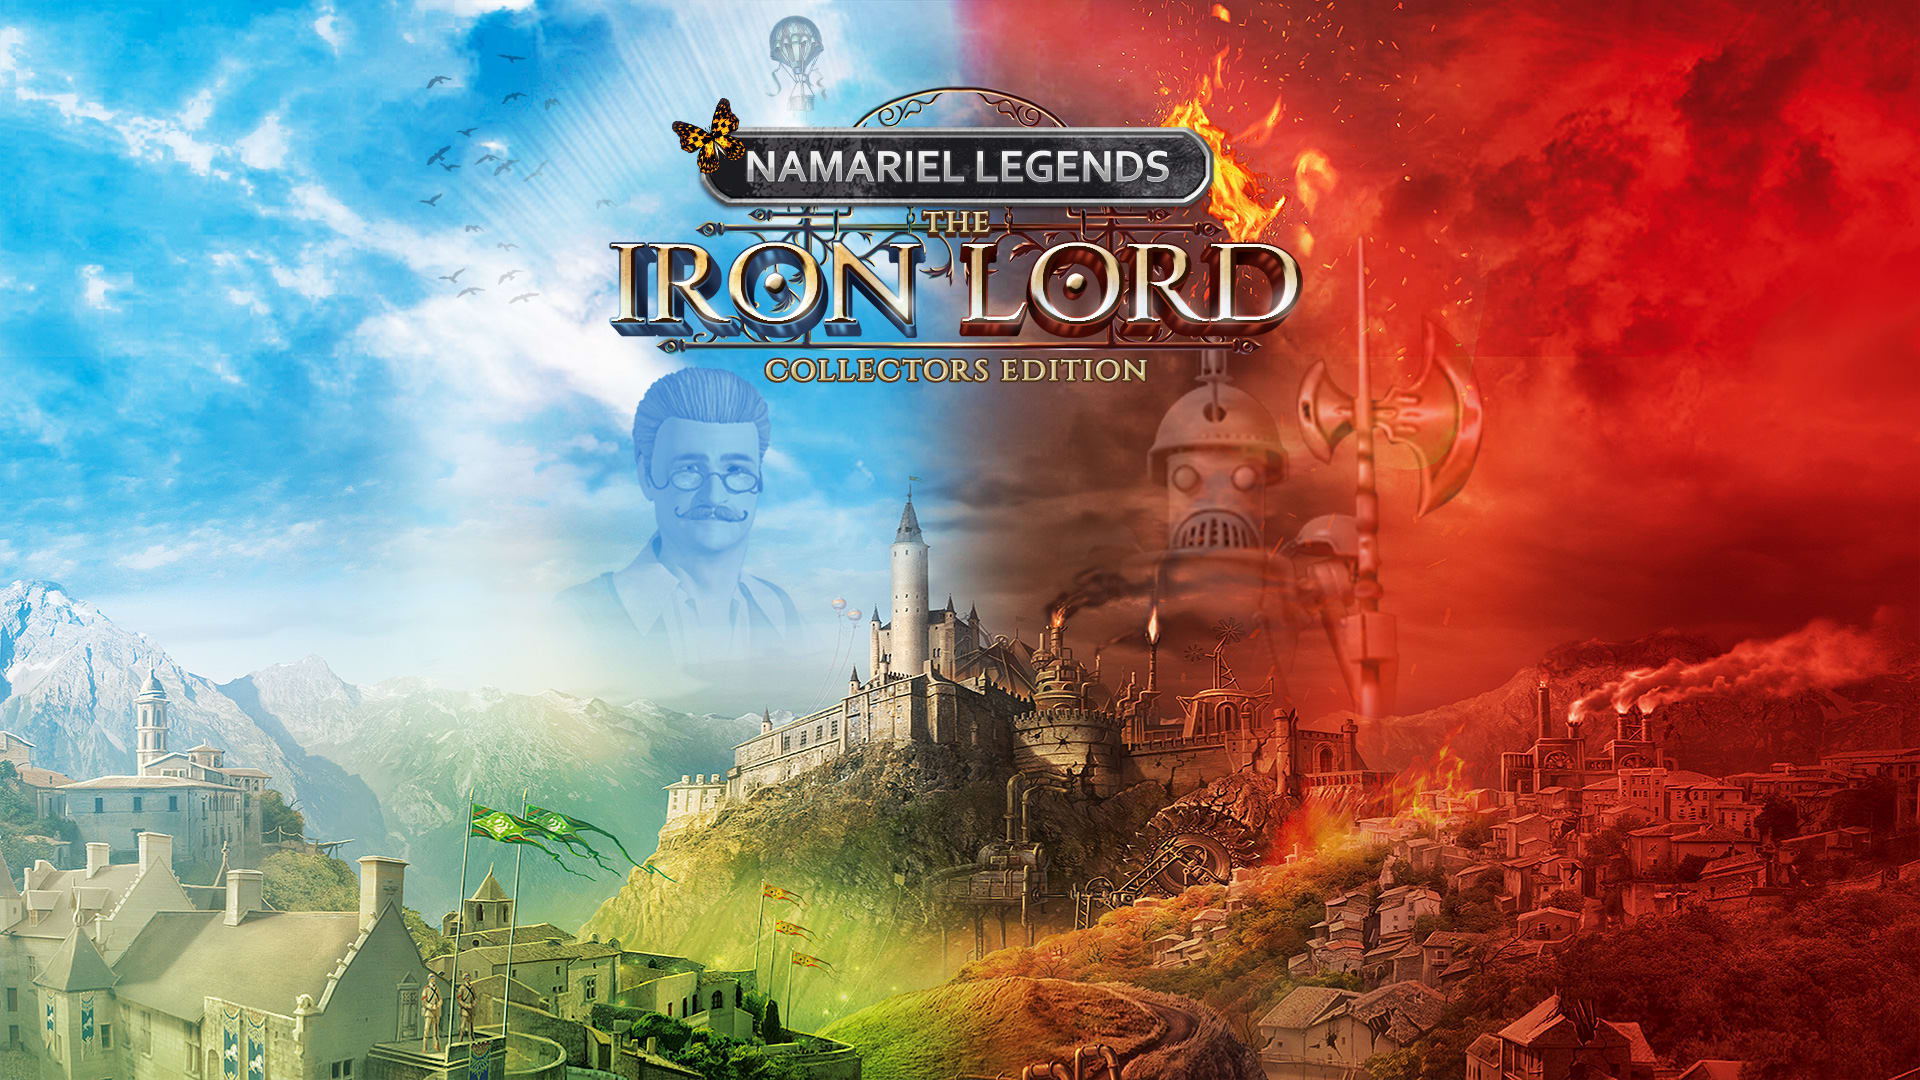 Namariel Legends - Iron Lord